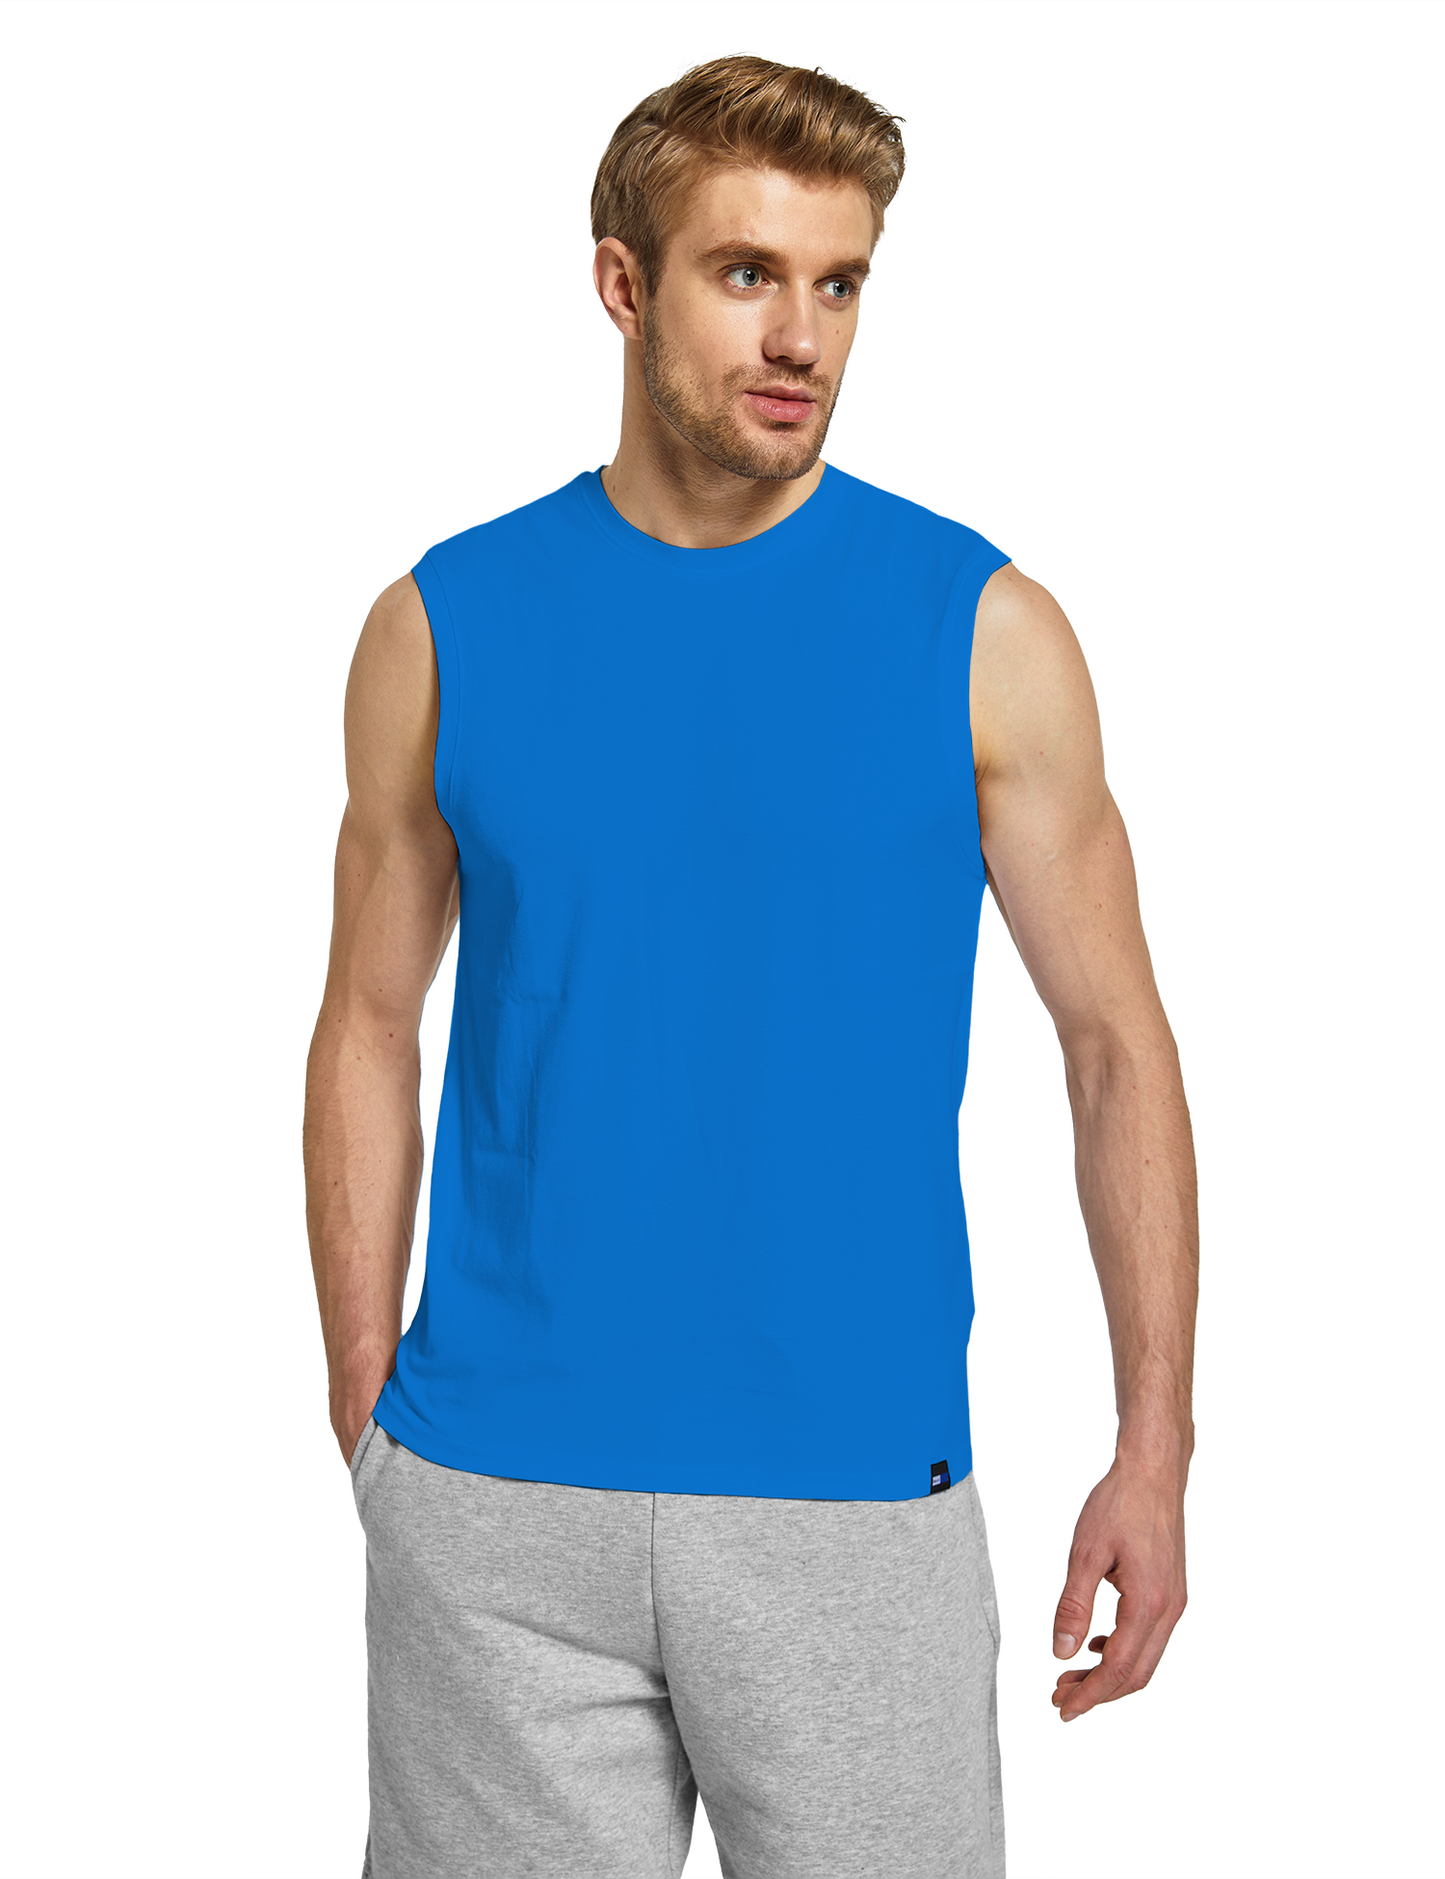 mens sleeveless shirts blue